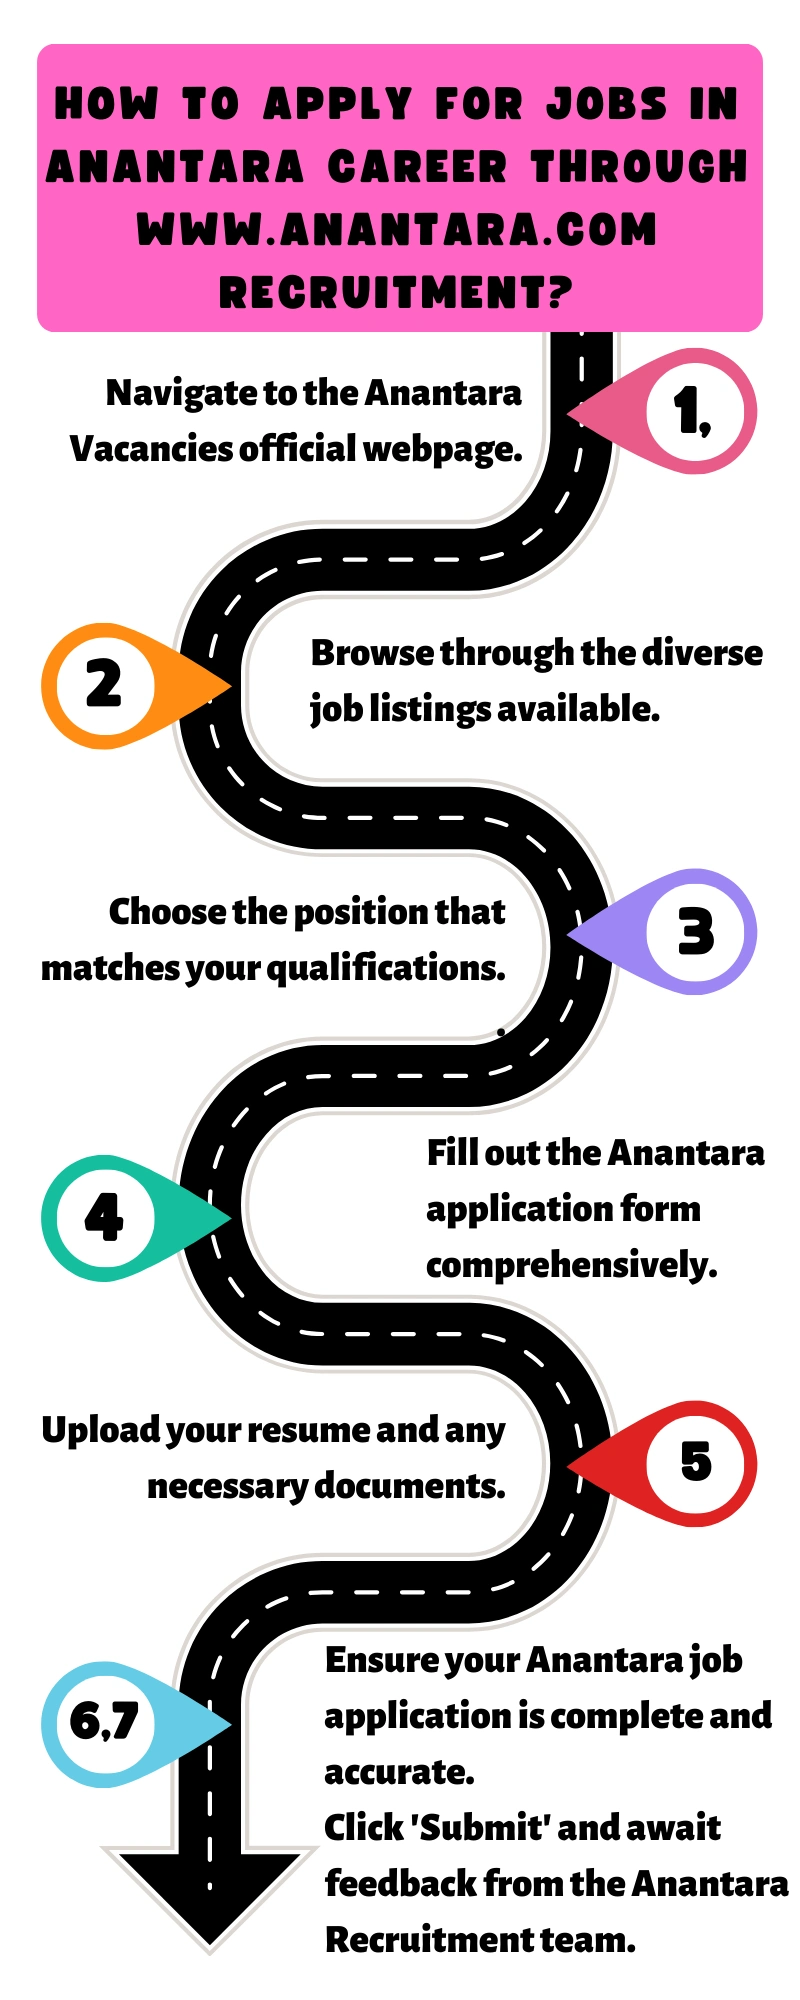 How to Apply for Jobs in Anantara Career through www.anantara.com recruitment?